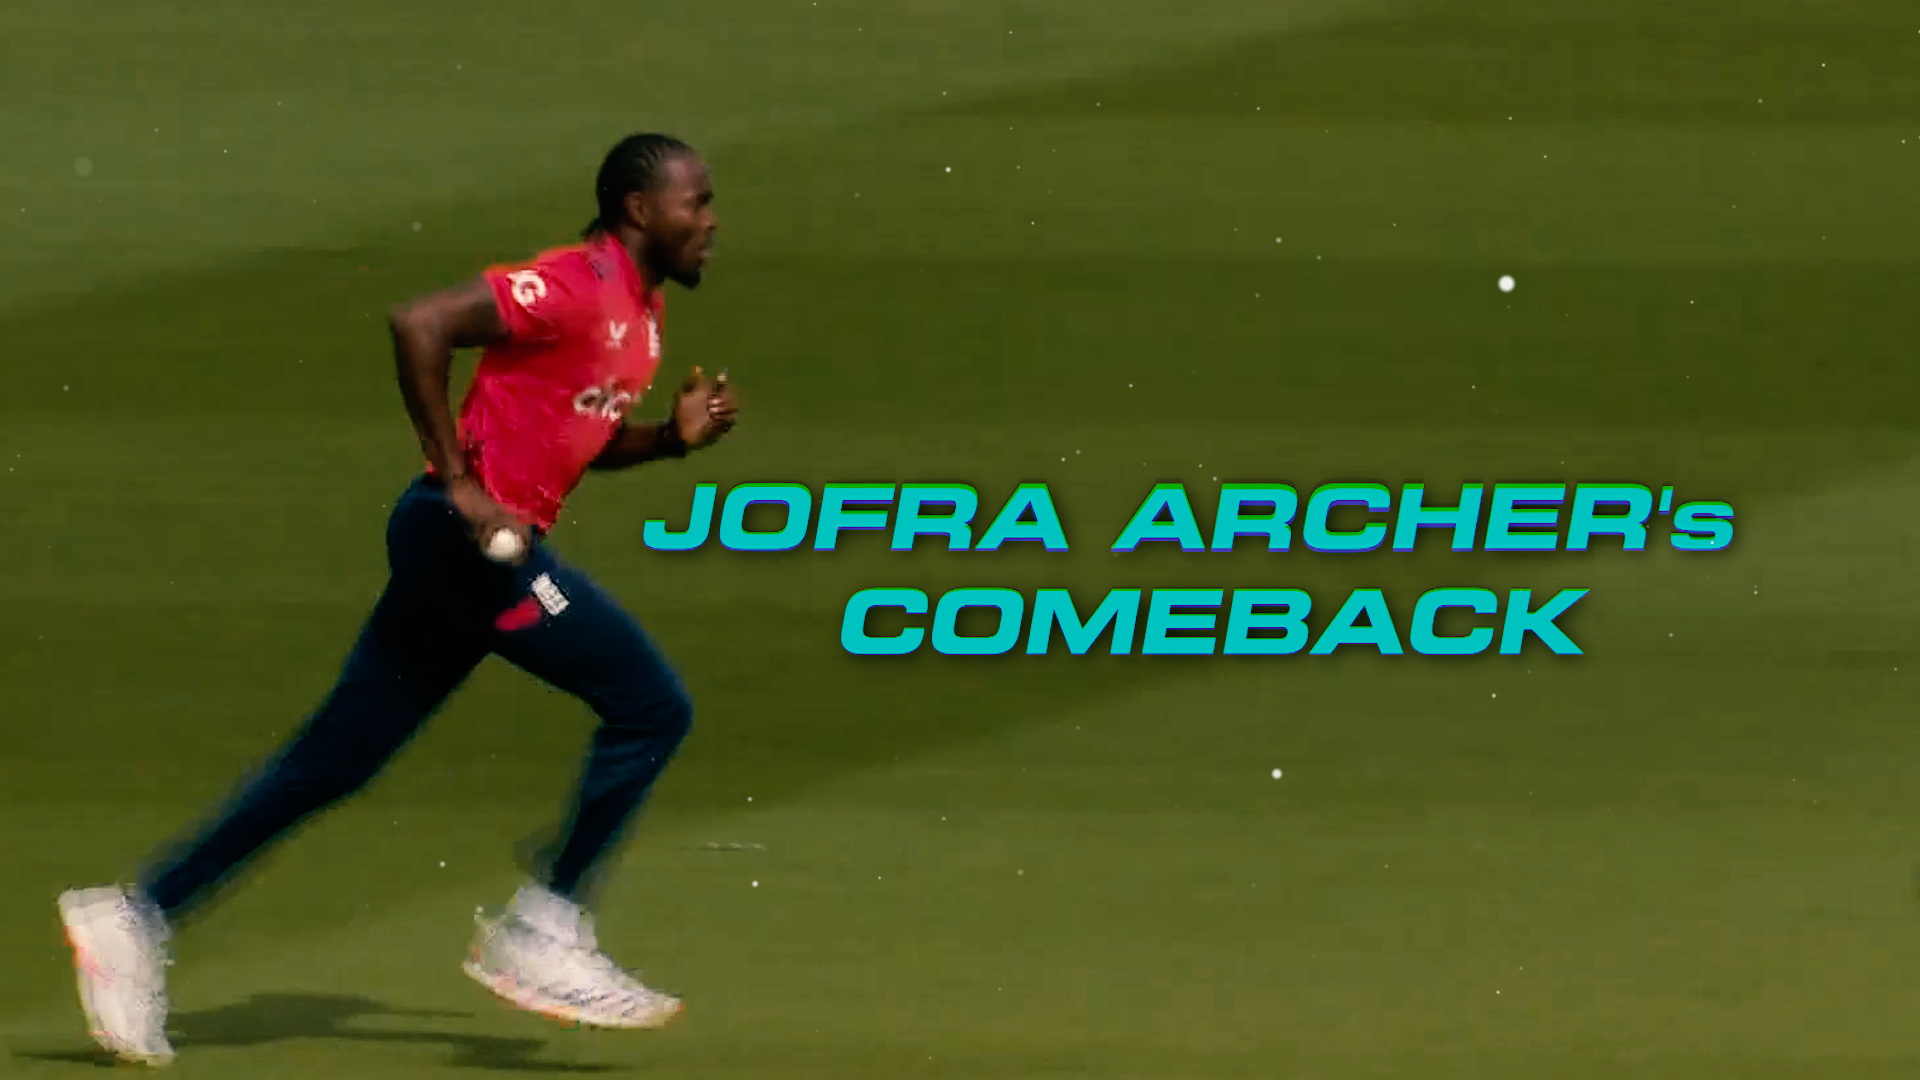 Jofra Archer's comeback